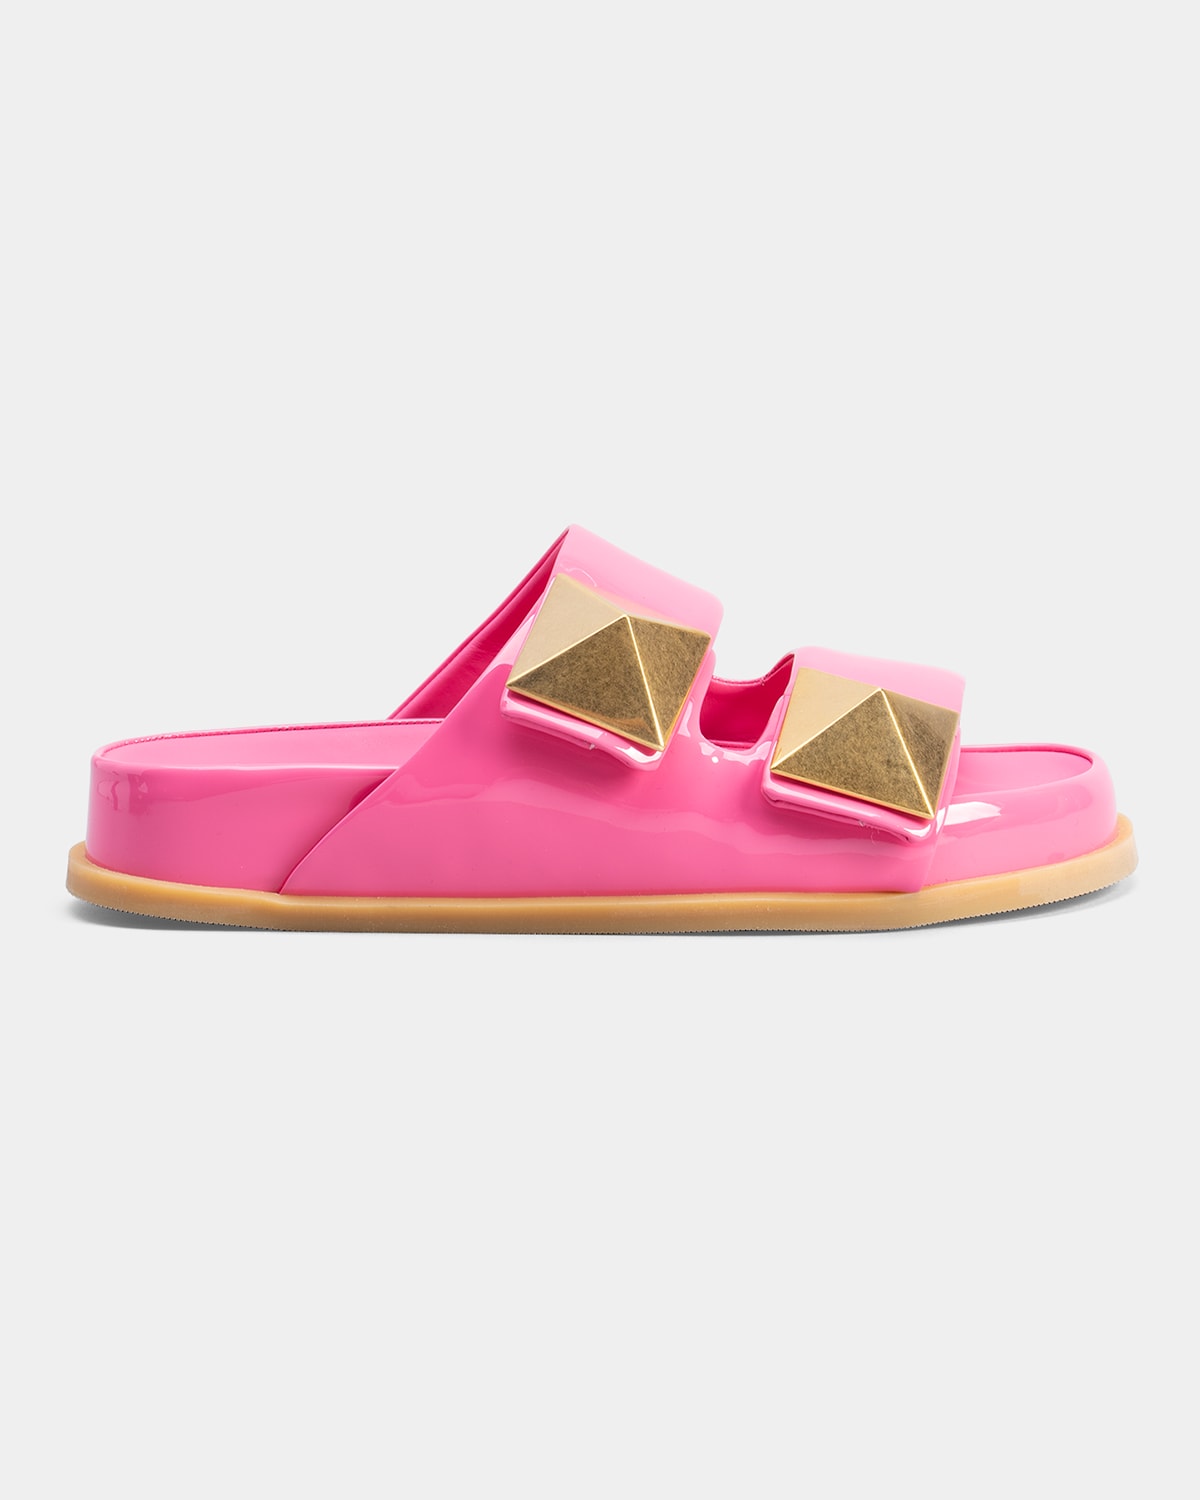 Valentino Garavani Women's Studded Double Strap Slide Sandals In Bright Pink